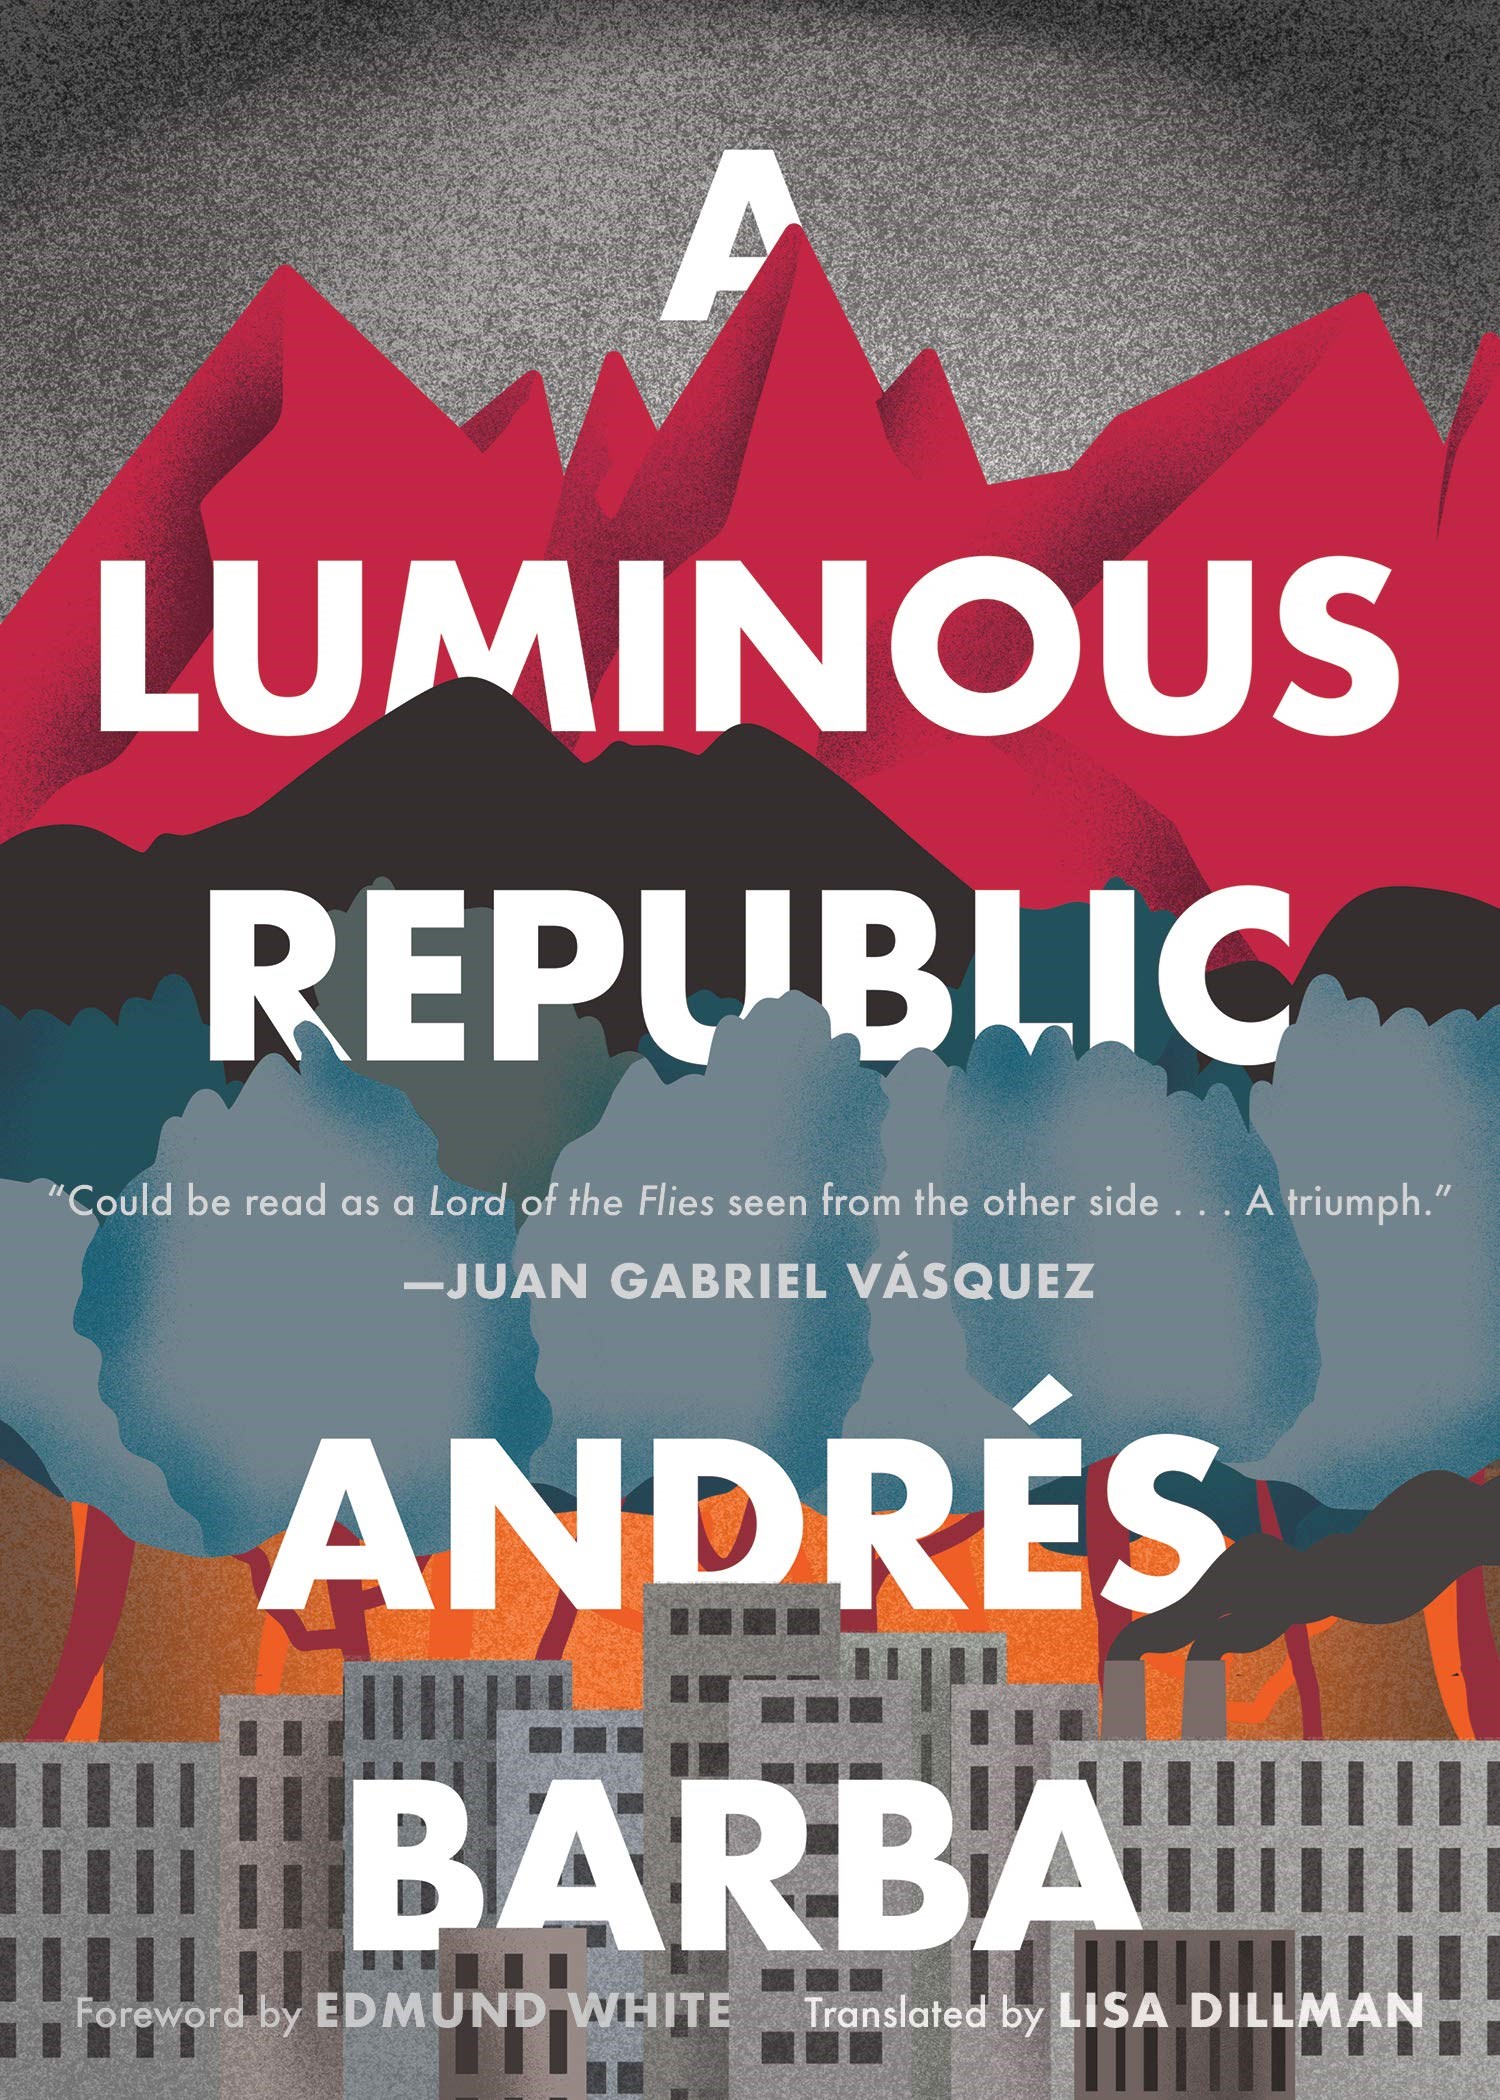 A Luminous Republic by Andres Barba